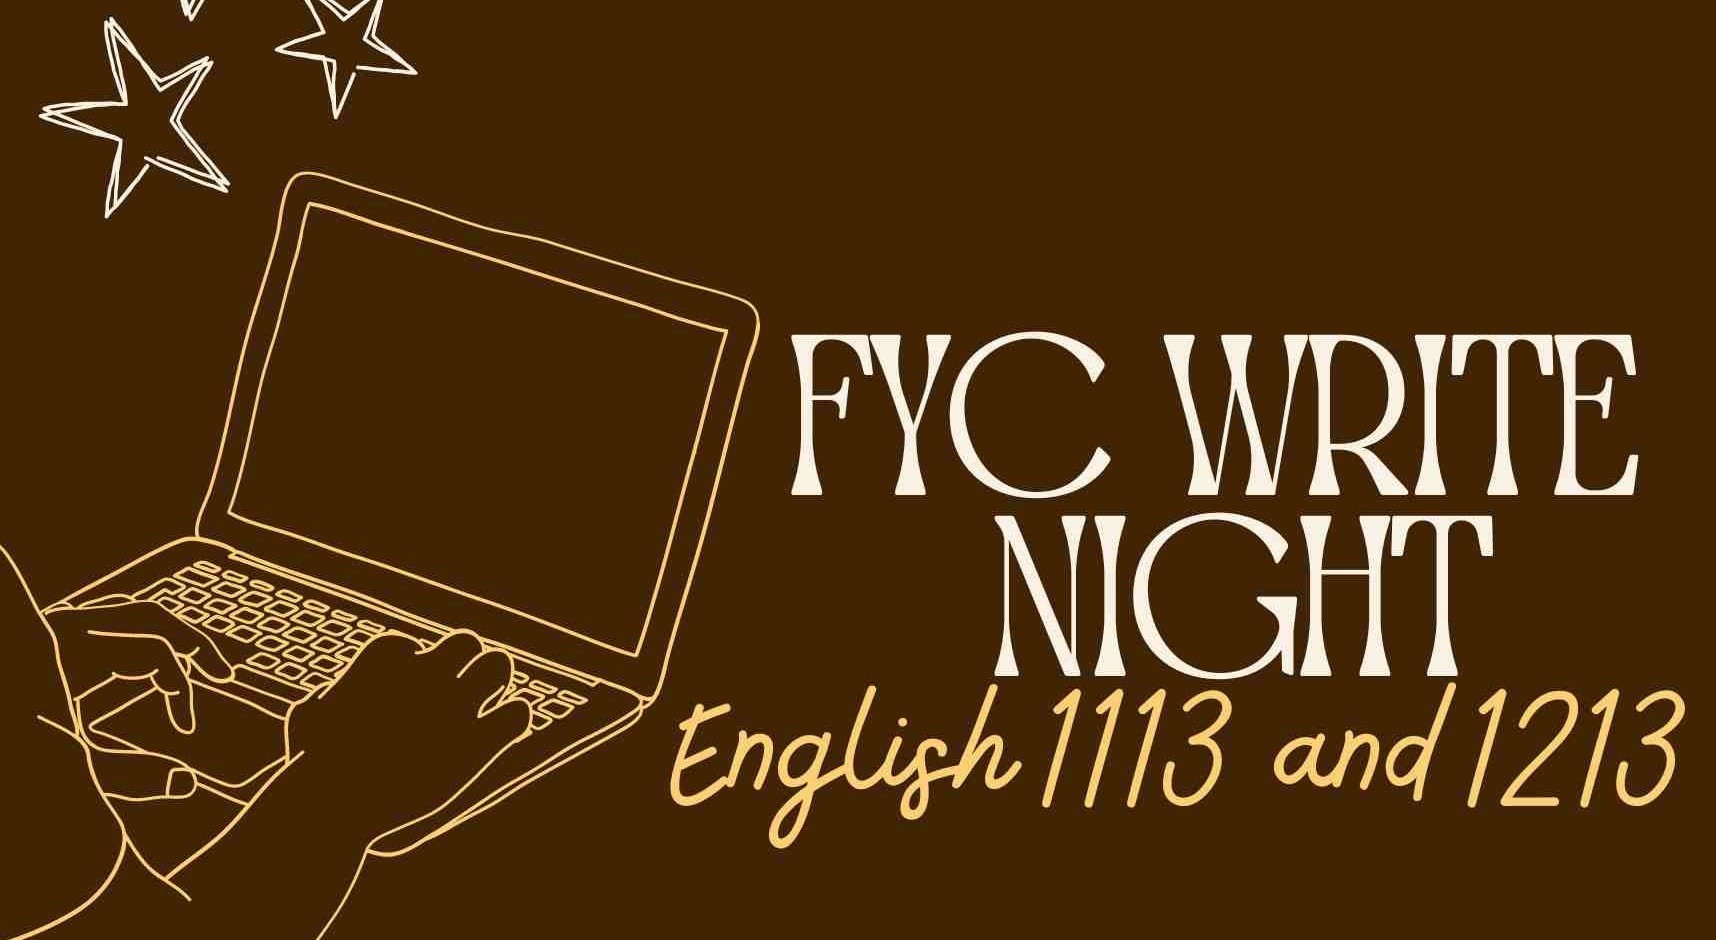 FYC Write Night, English 1113 and 1213